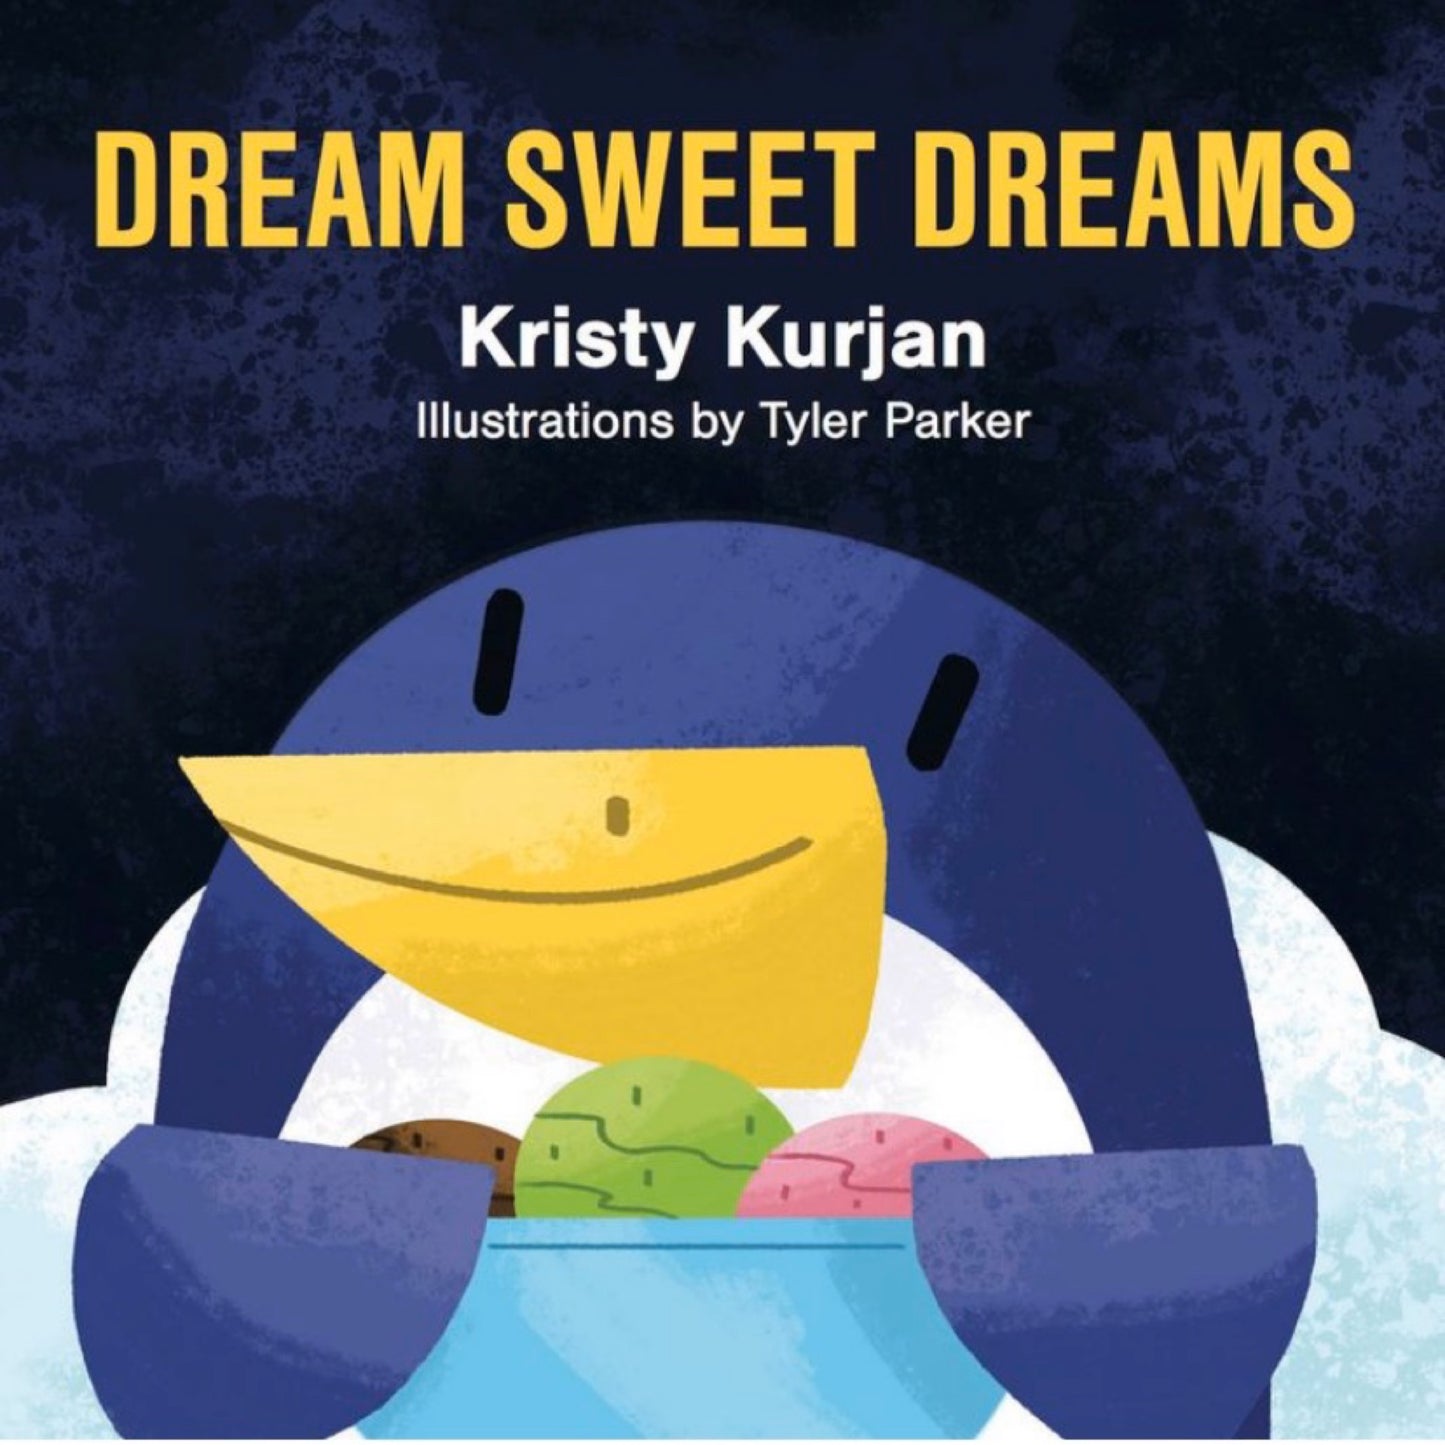 Book—Dream Sweet Dreams